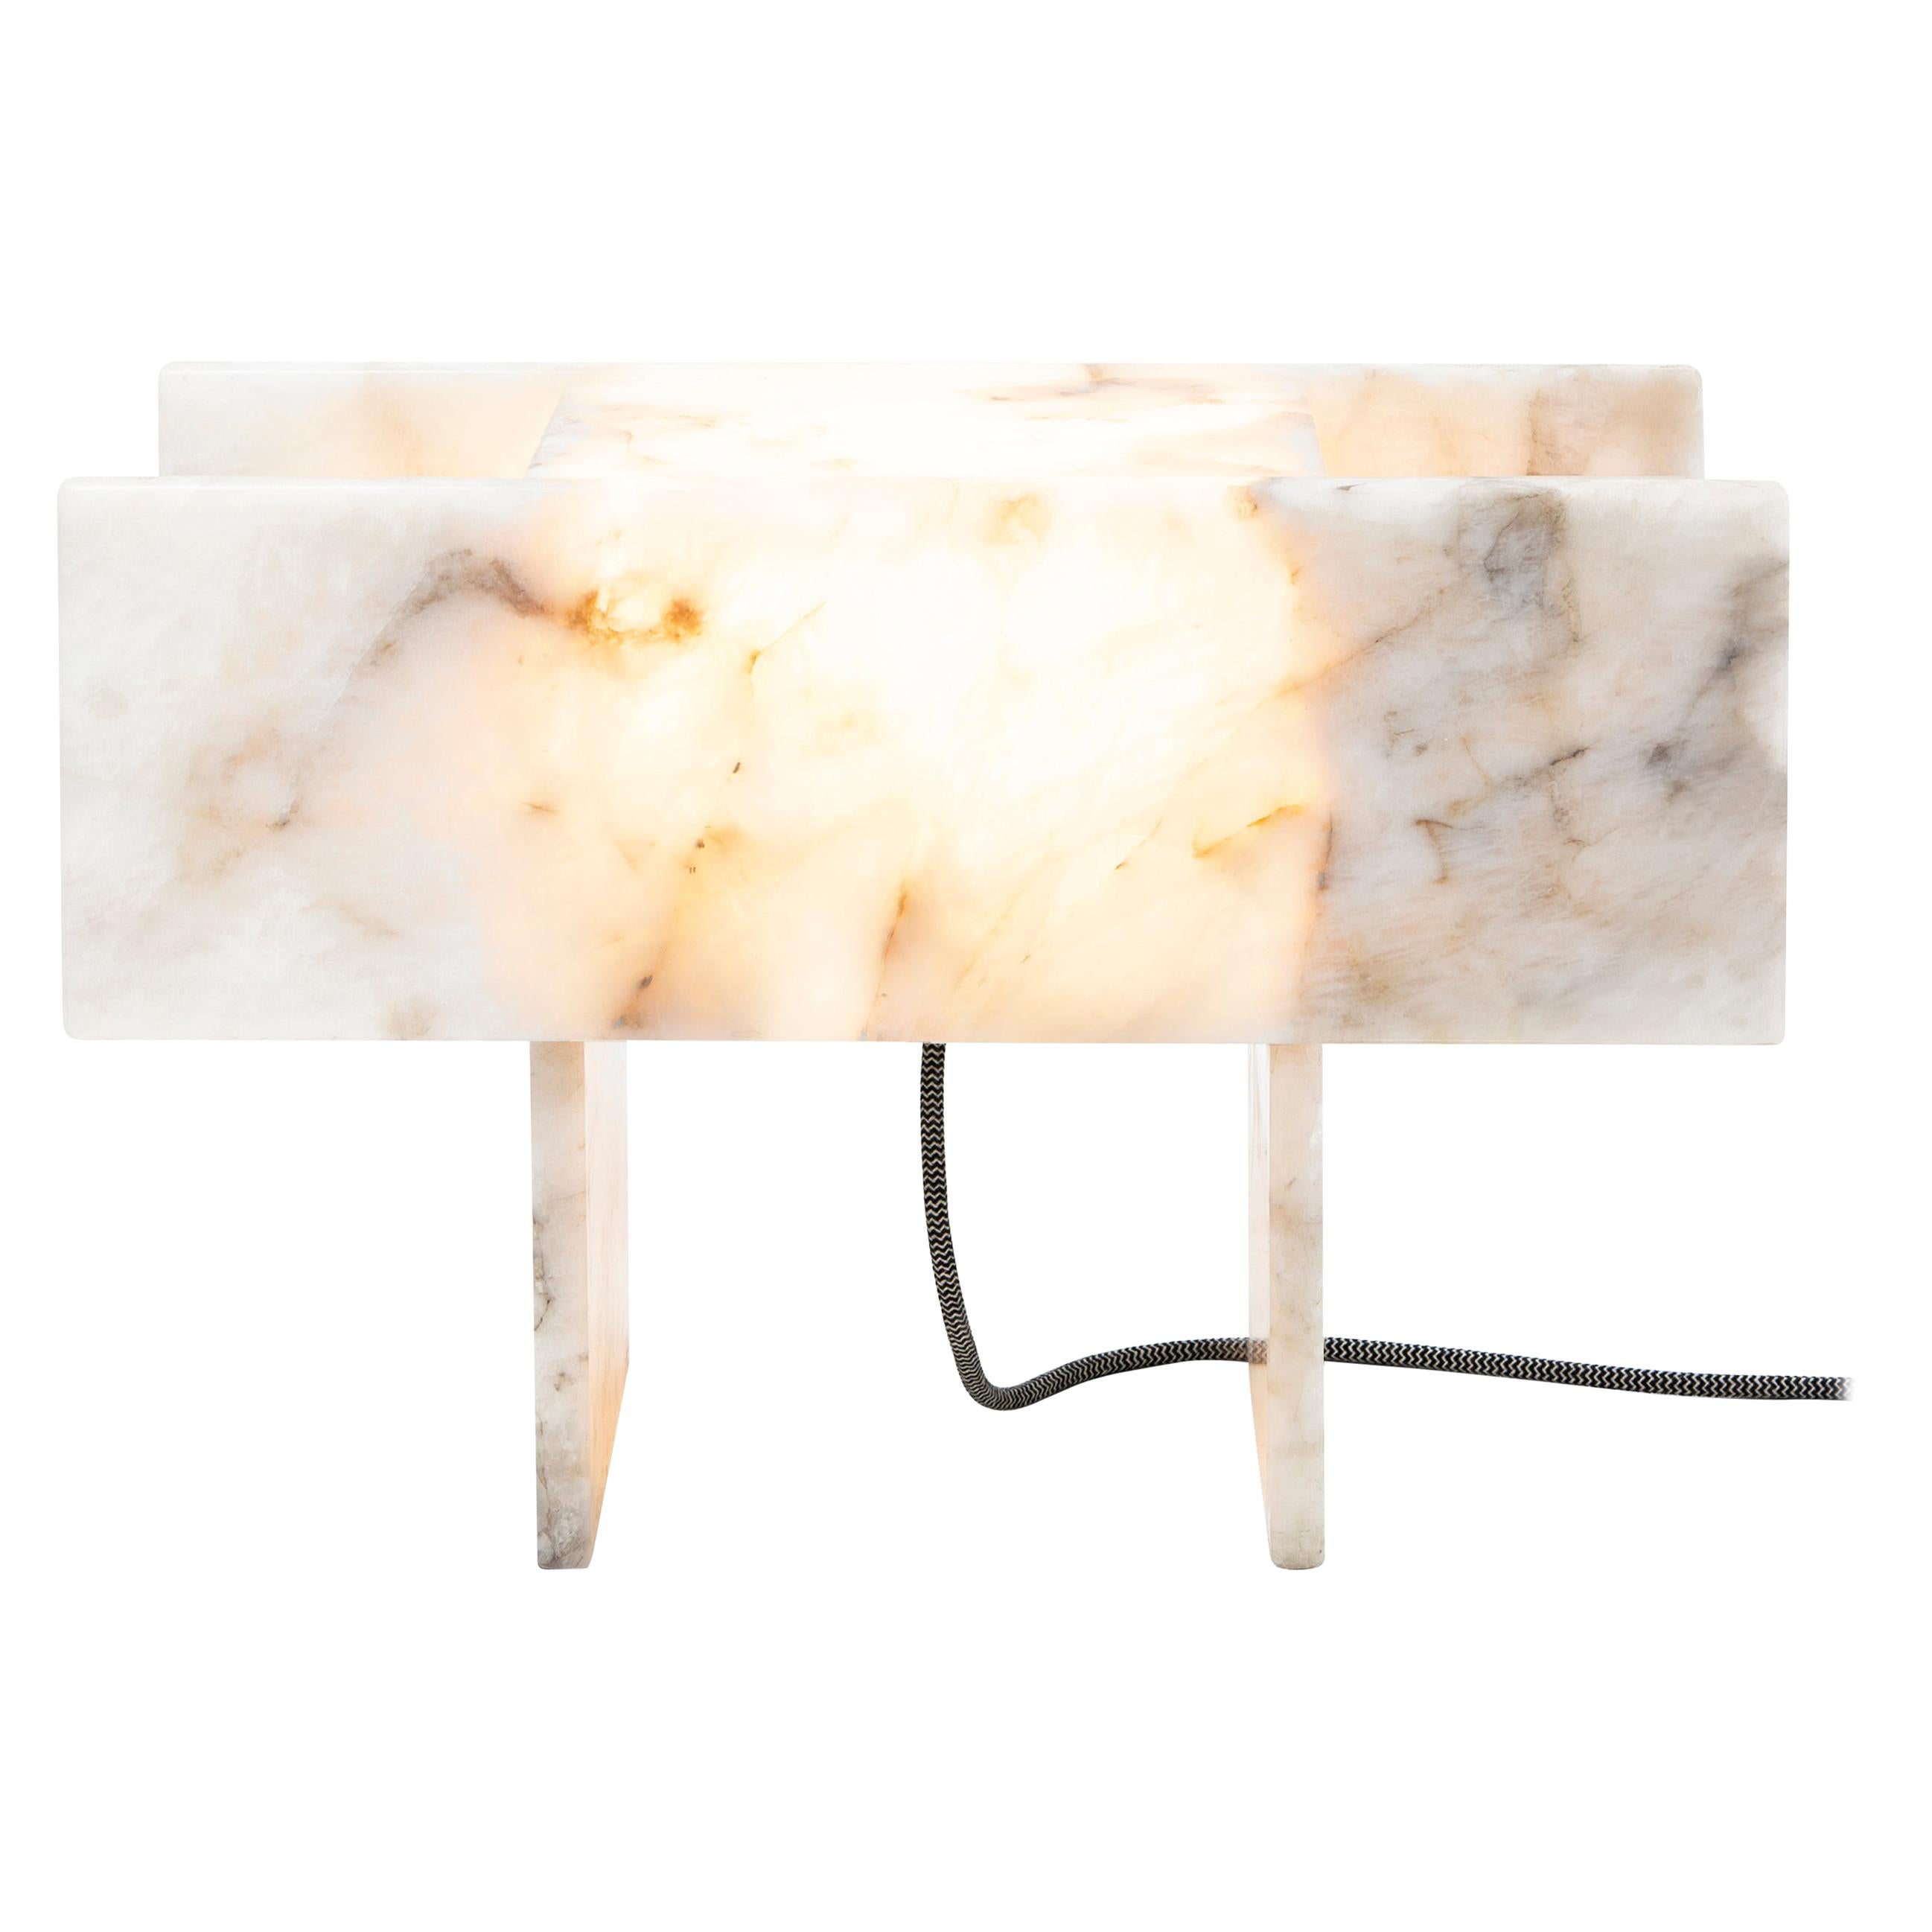 This is Pedrita table lamp (Model M) made of translucent quartz and it is part of Pedrita lamp series.
Pedrita lamp series’ concept is based on an experimentation of Brazilian stones: quartzites and quartz crystals, which are natural stones found in